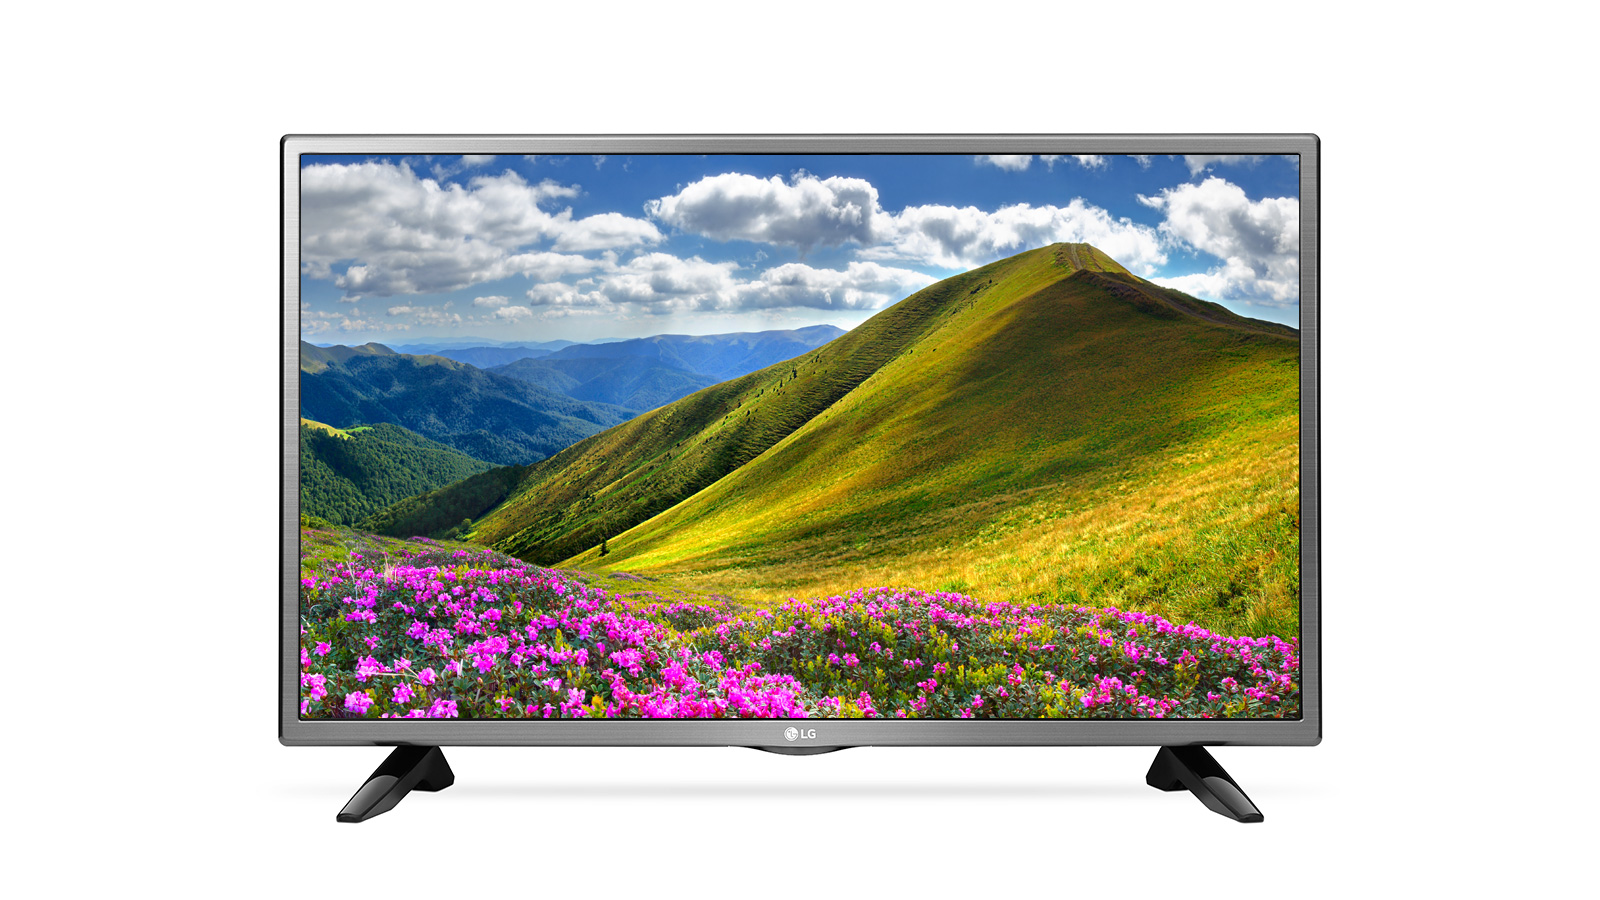 LG 32LJ520U 32-inch Multi-System HD LED TV